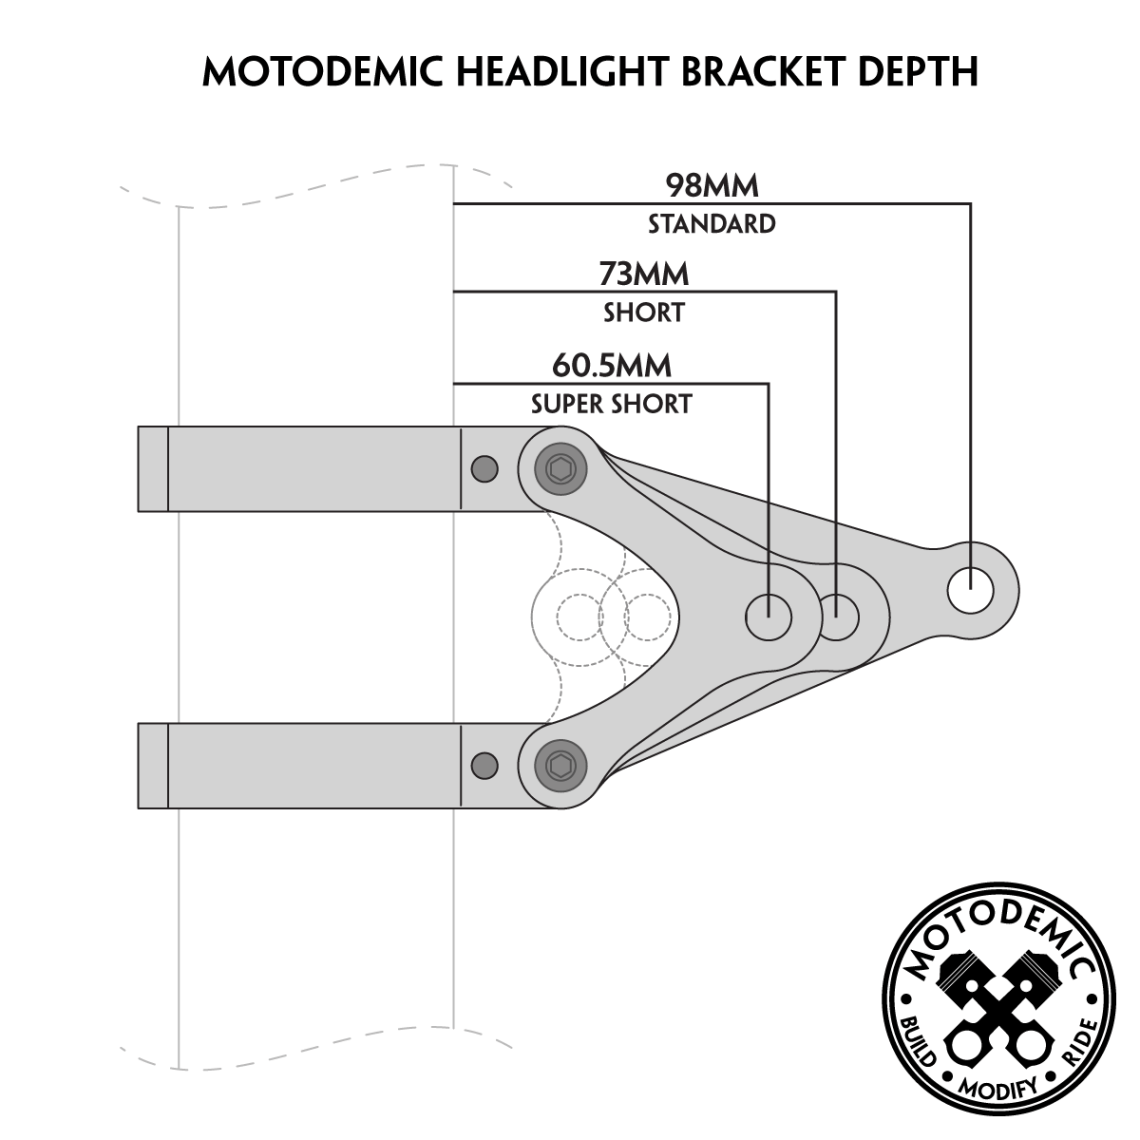 43mm MOTODEMIC Headlight Brackets